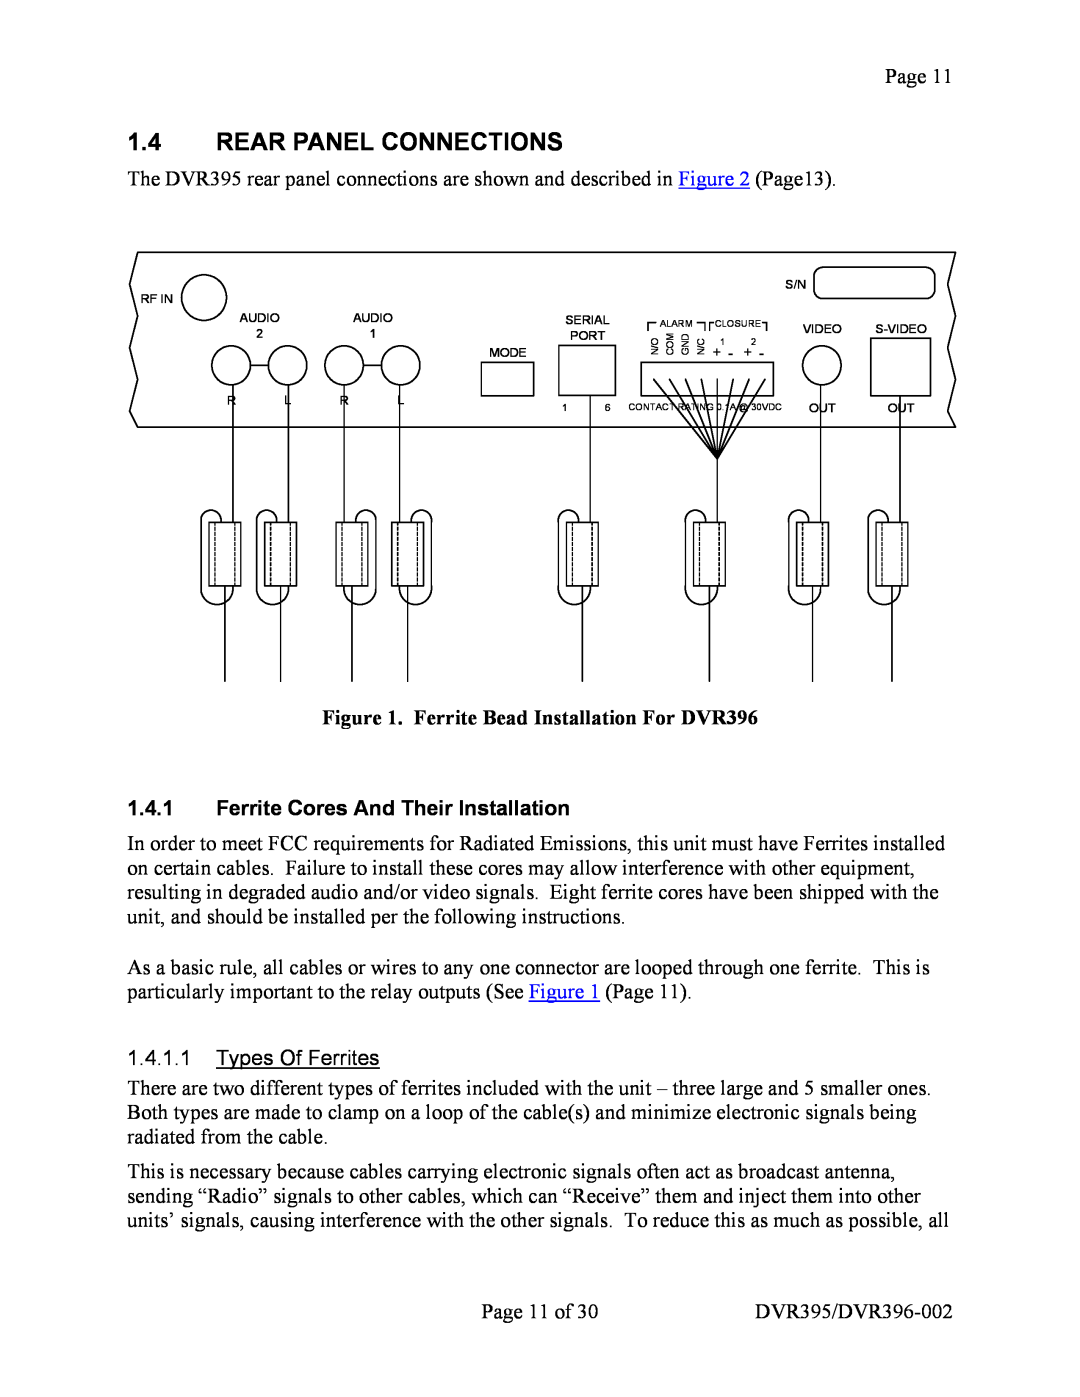 Wegener Communications DVR395 manual 1.4REAR PANEL CONNECTIONS, Ferrite Bead Installation For DVR396 